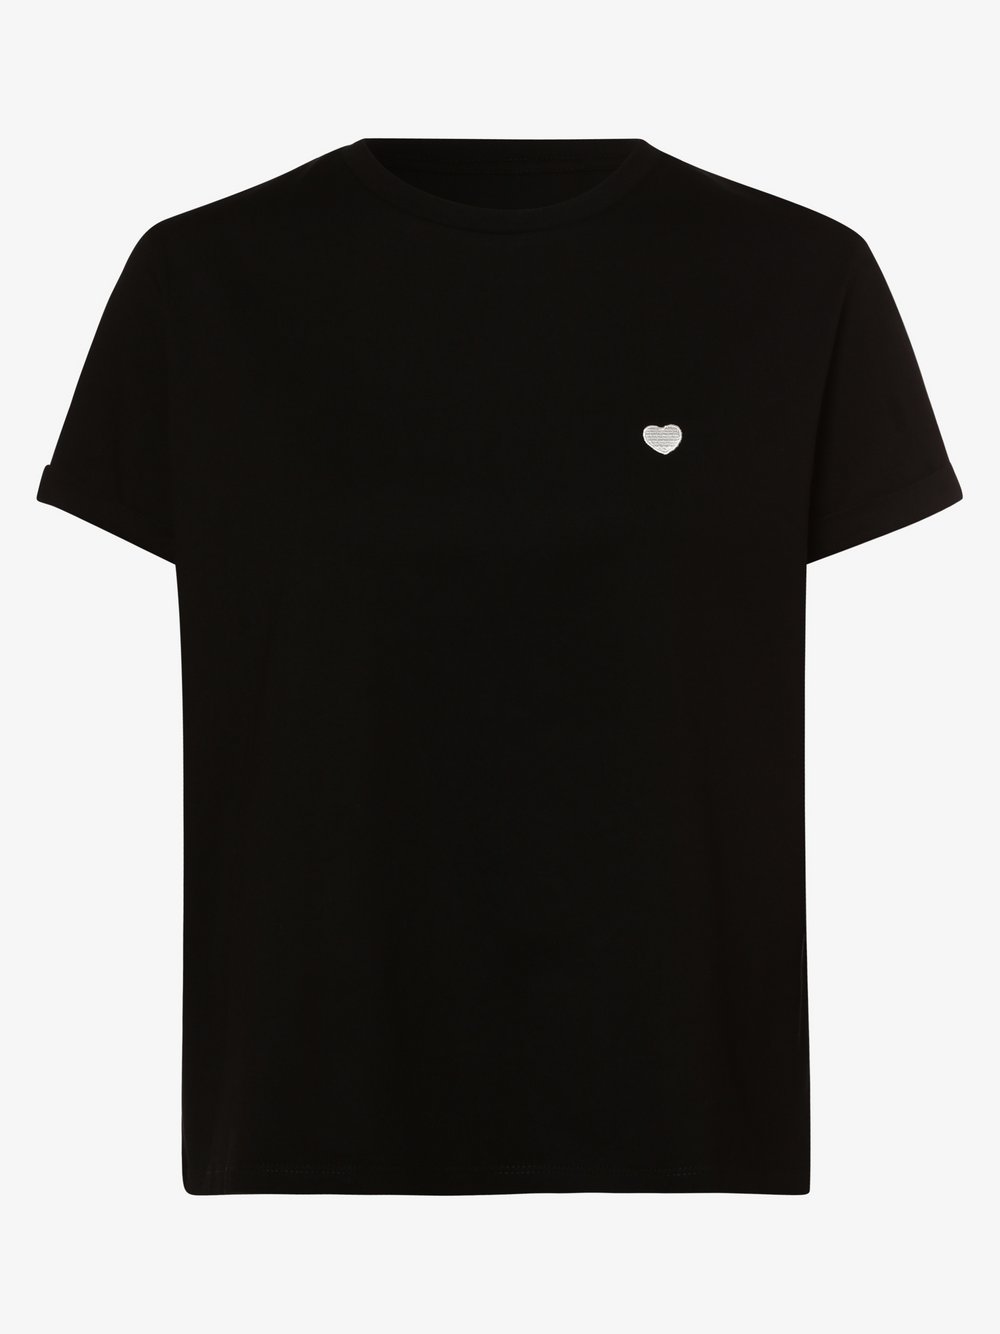 Opus - T-shirt damski – Serz, czarny